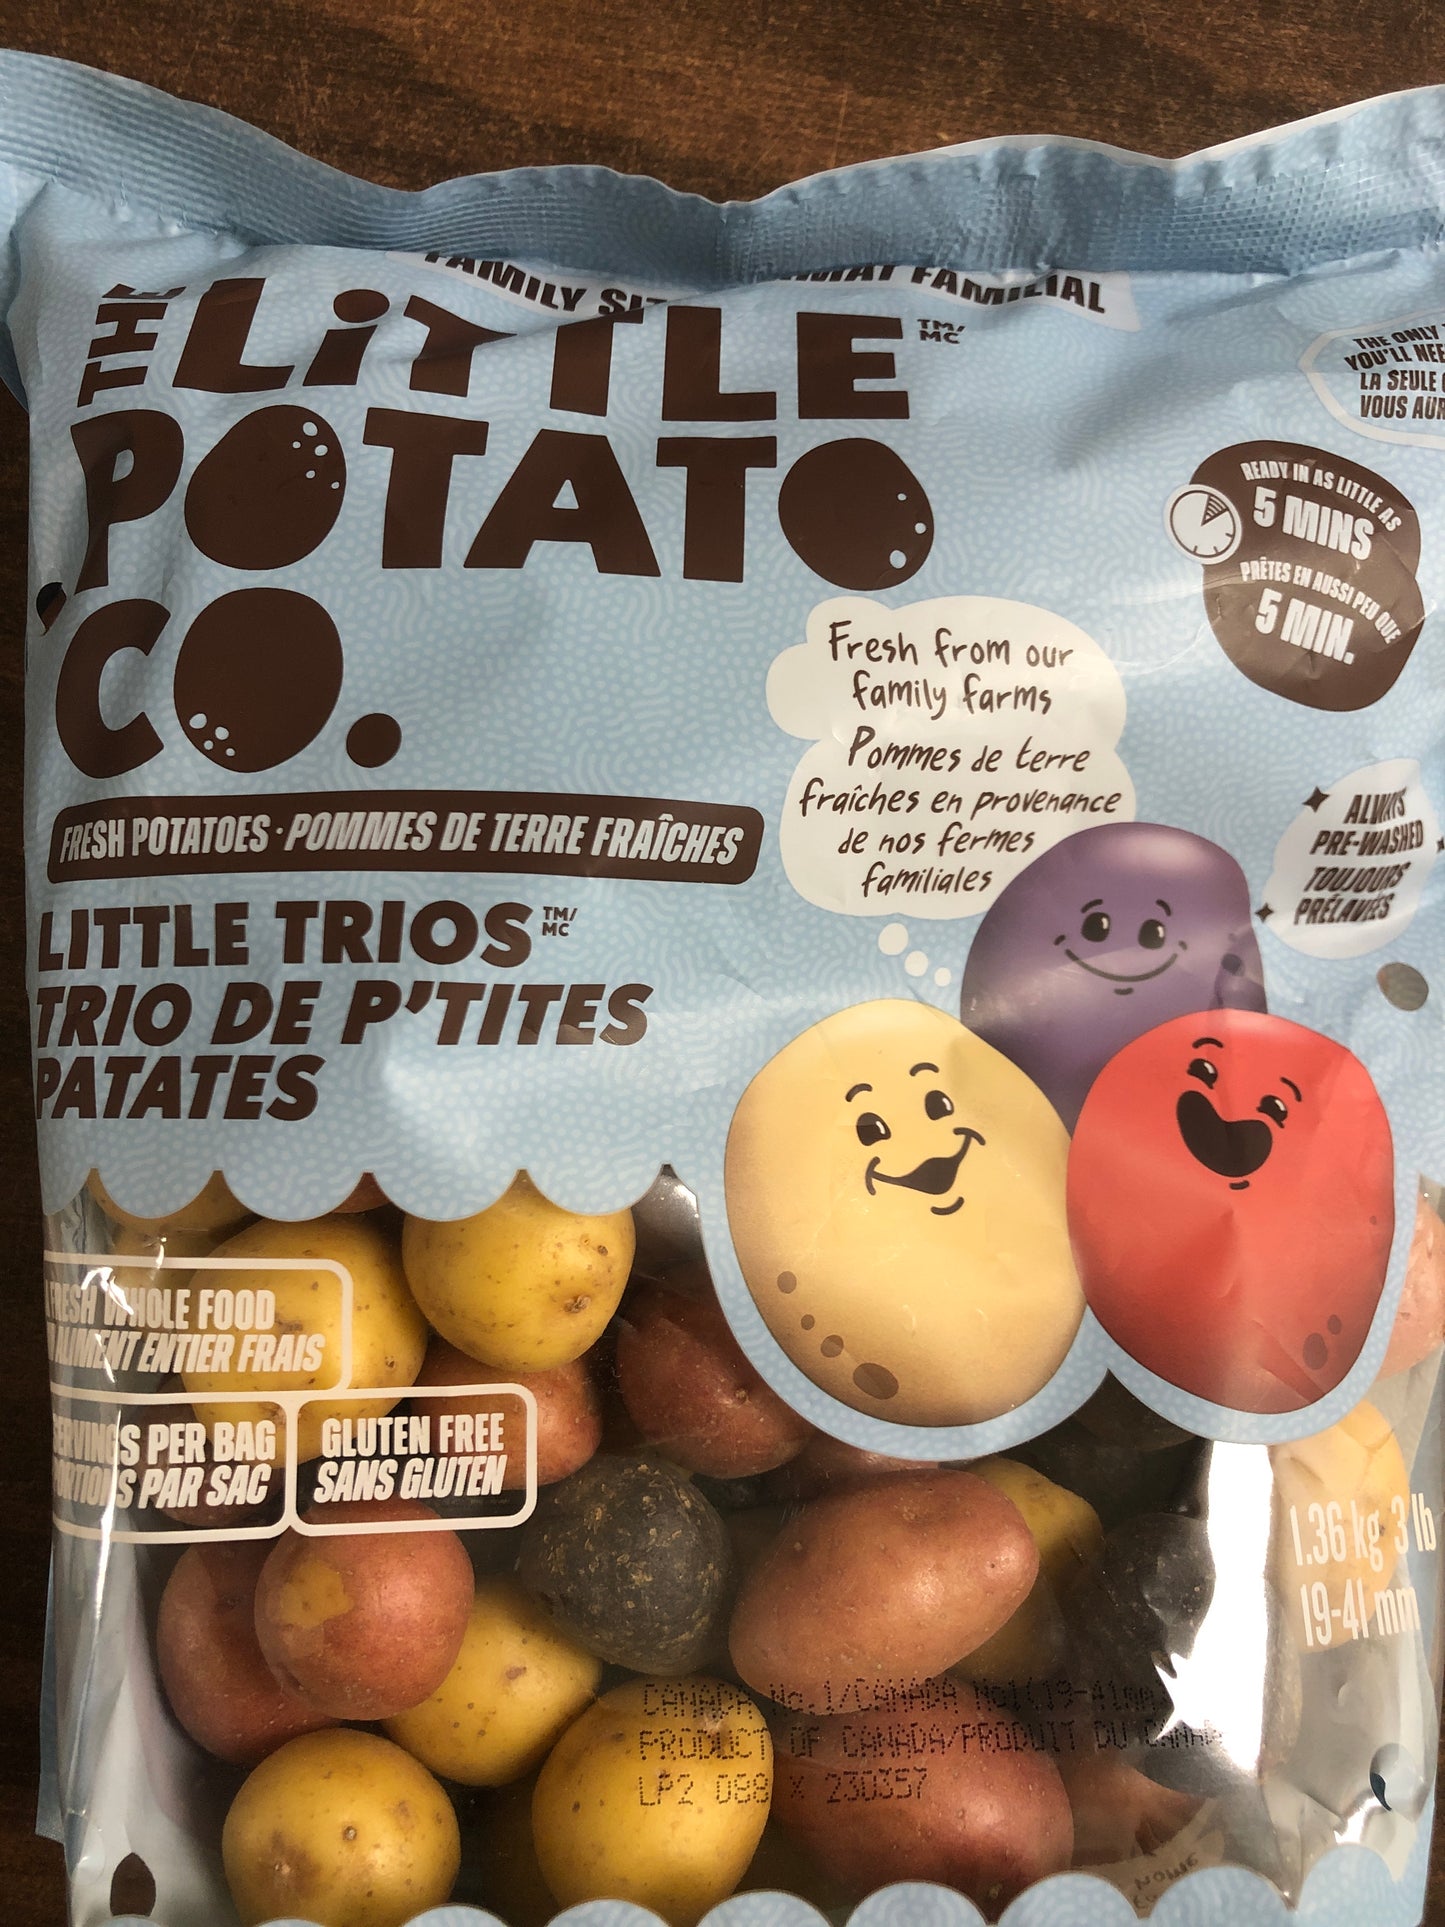 Potatoes -Variety